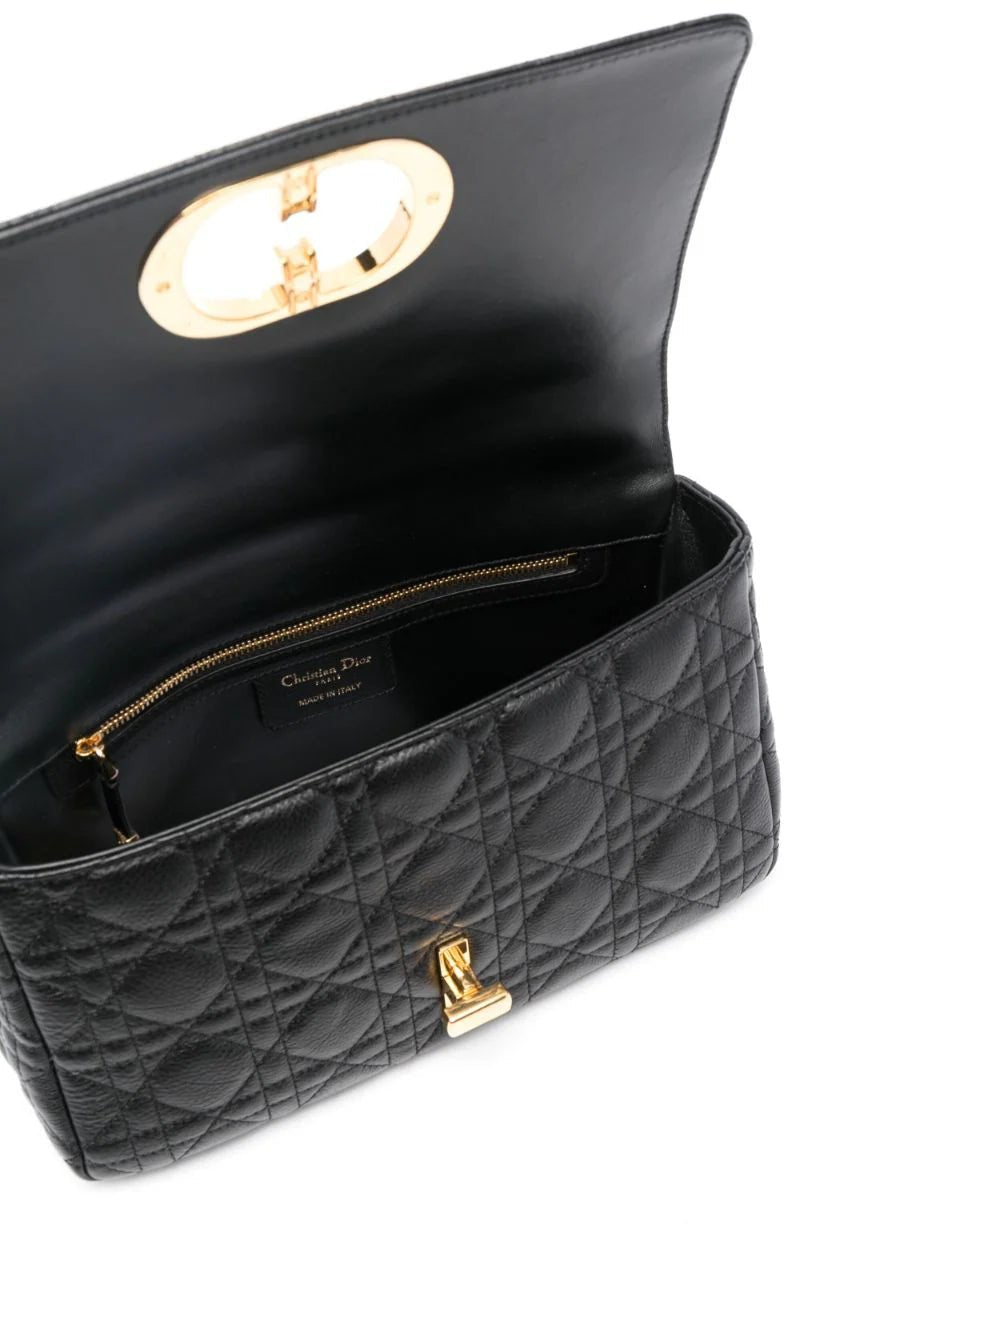 Christian Dior medium Cannage Caro shoulder bag - Rachellebags